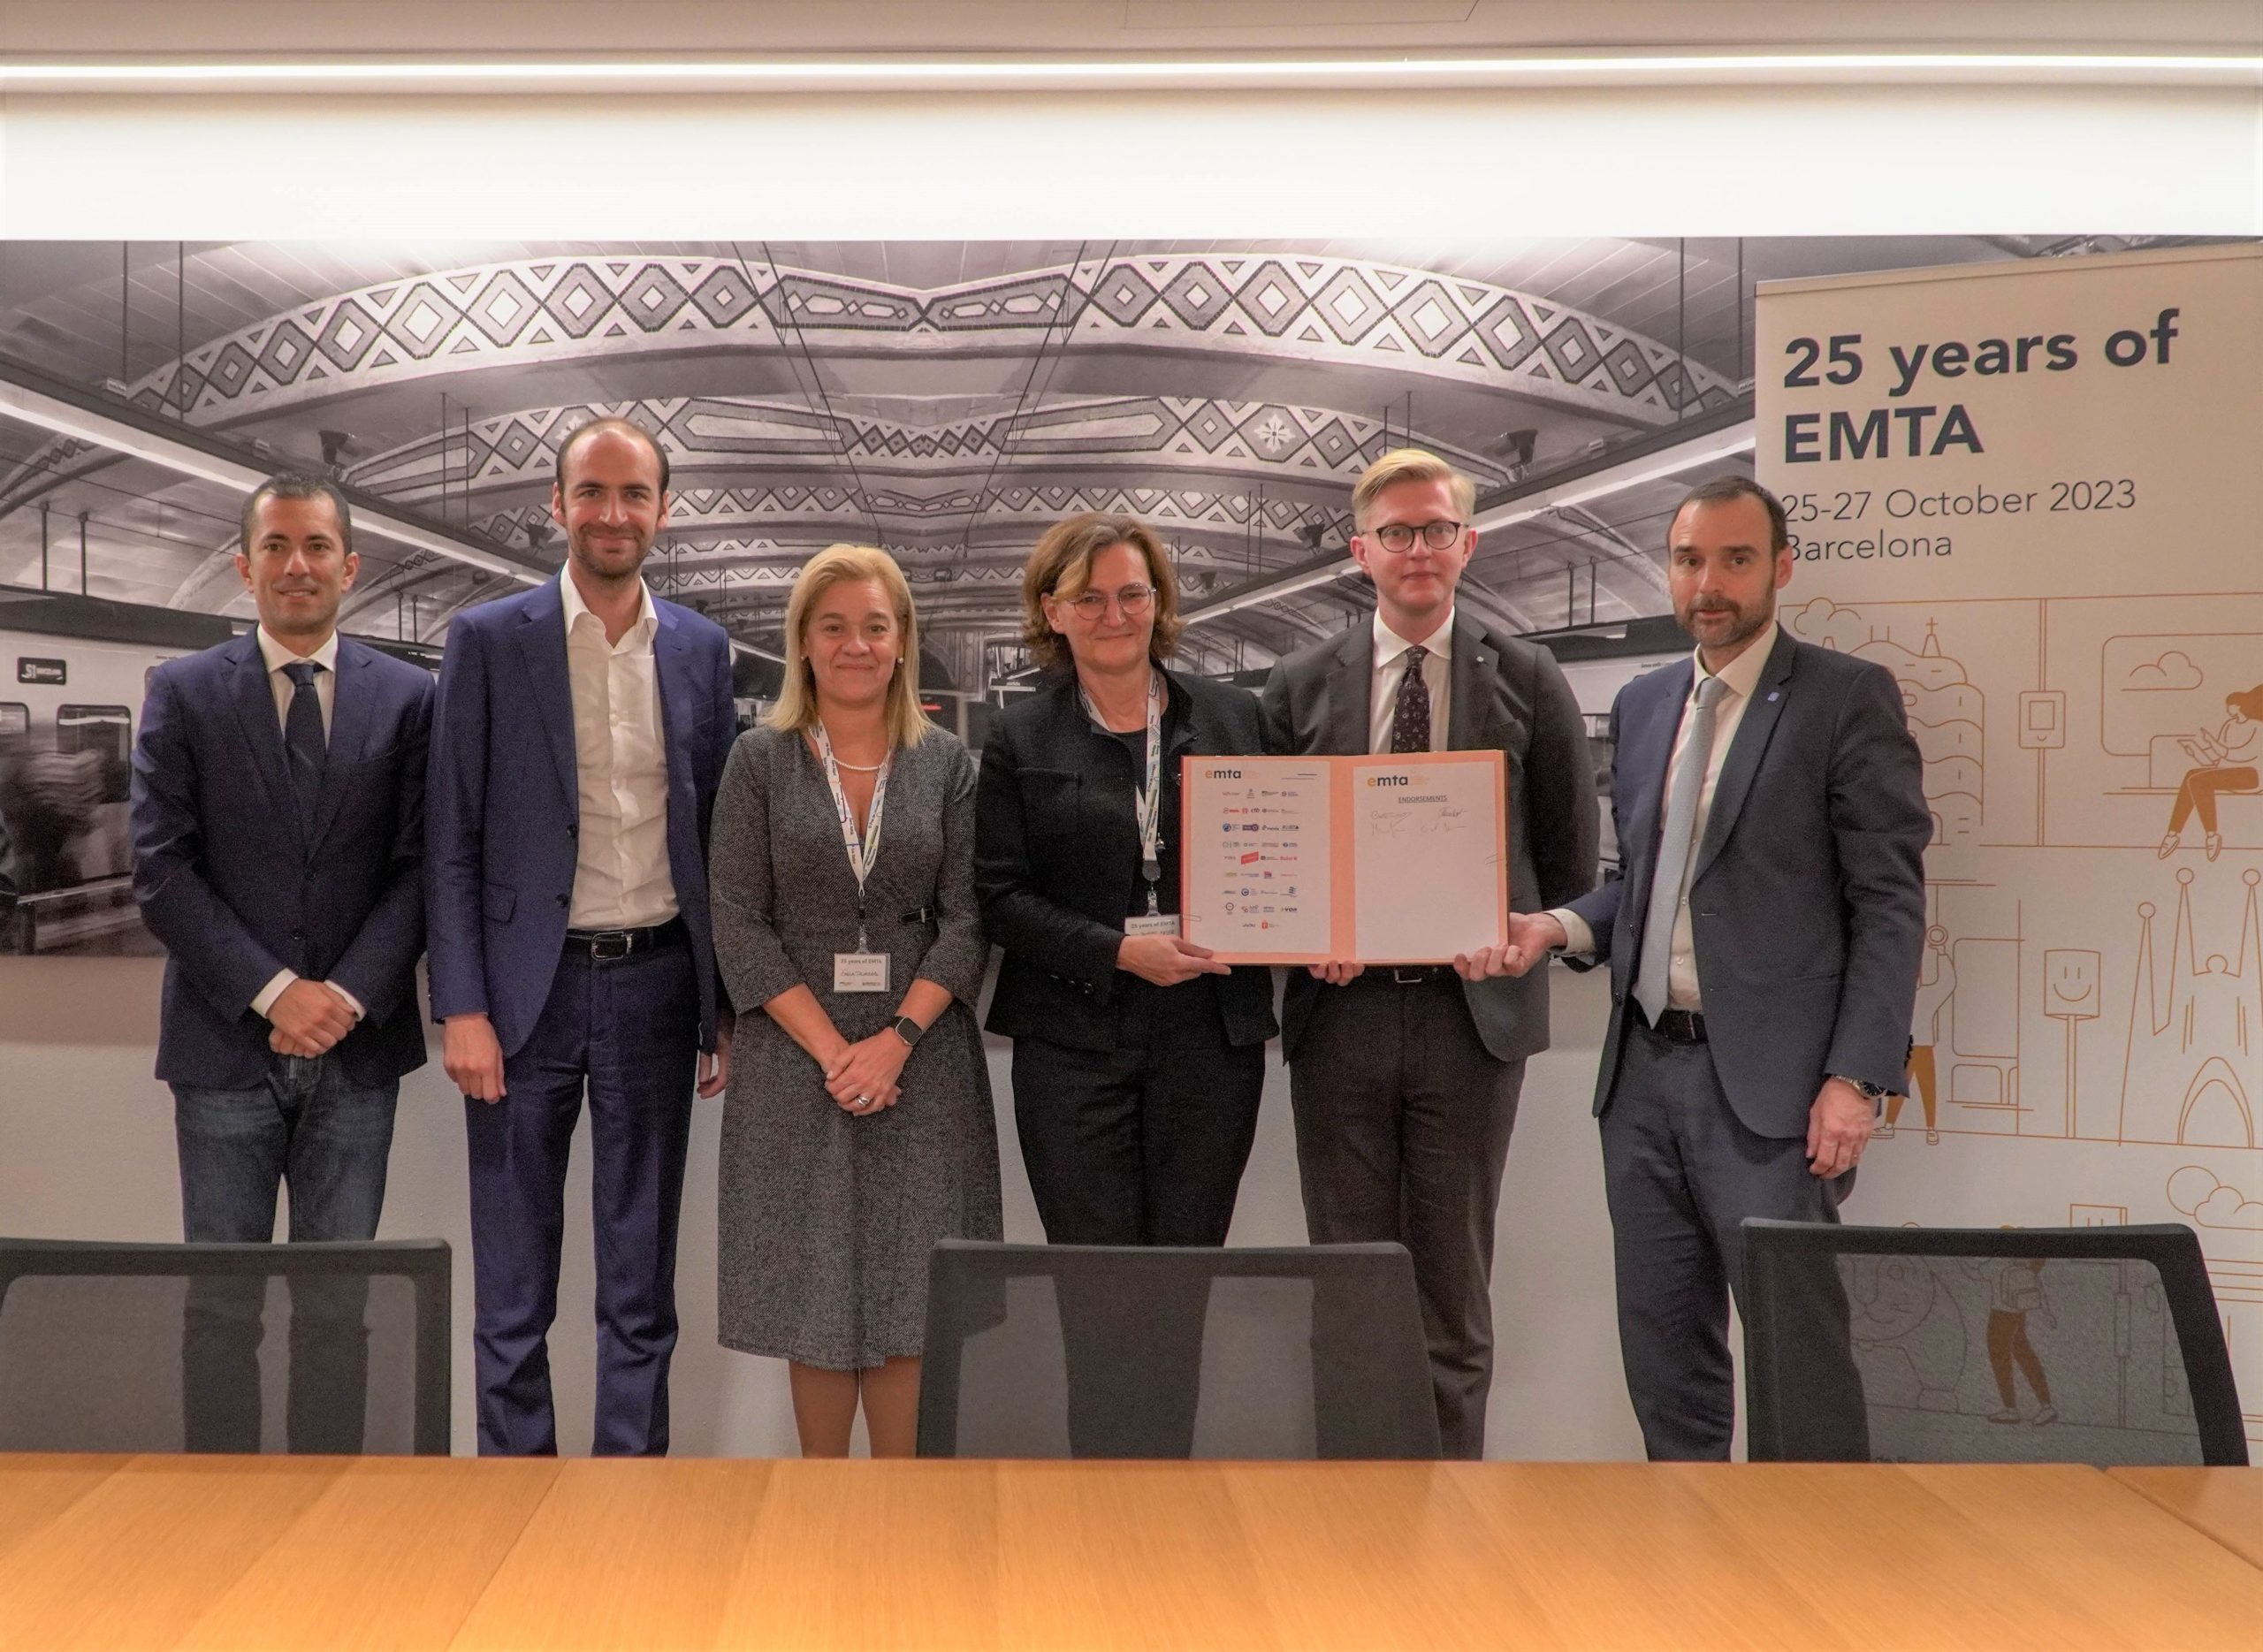 Marco Gabusi, Grégoire de Lasteyrie, Carla Tavares, Dorthe Nøhr Pedersen, Anton  Fendert and Laurent Probst, signatories of the EMTA Barcelona Declaration on 27 October 2023